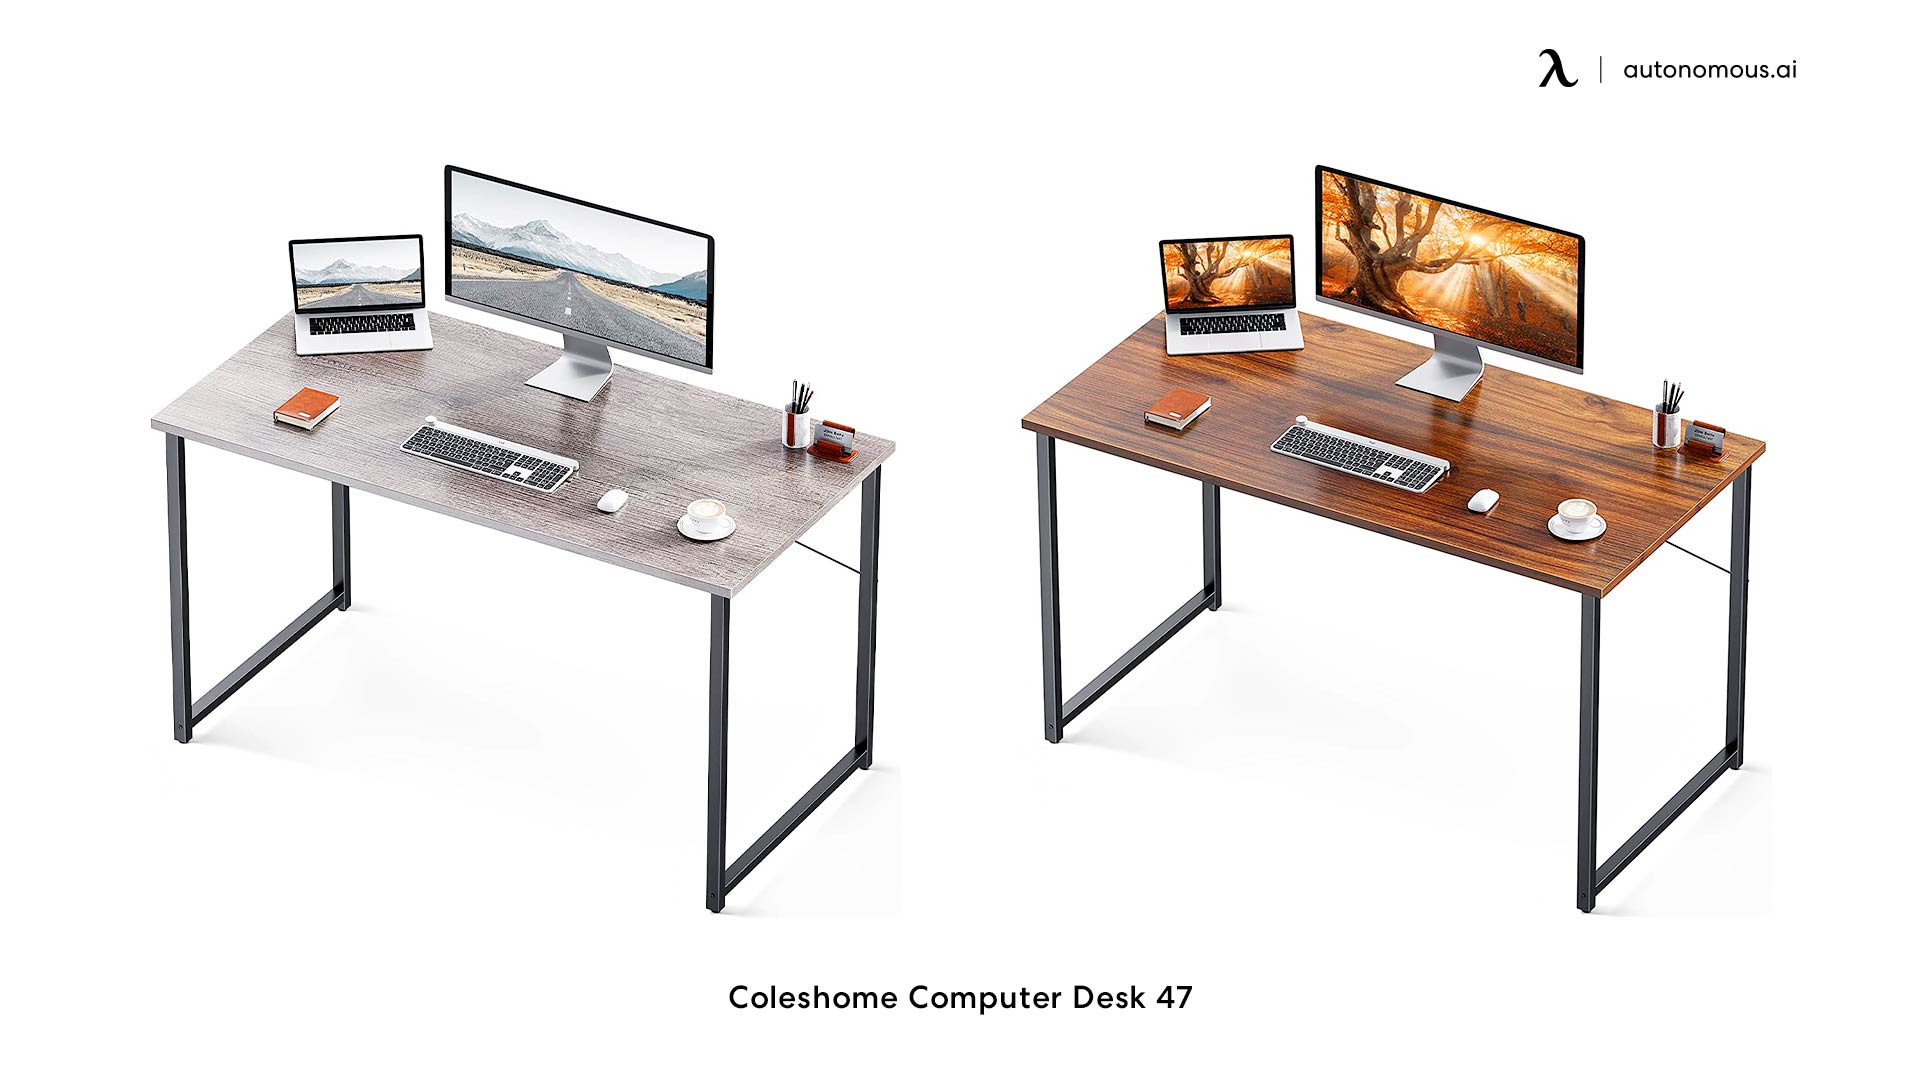 Coleshome Computer Desk 47